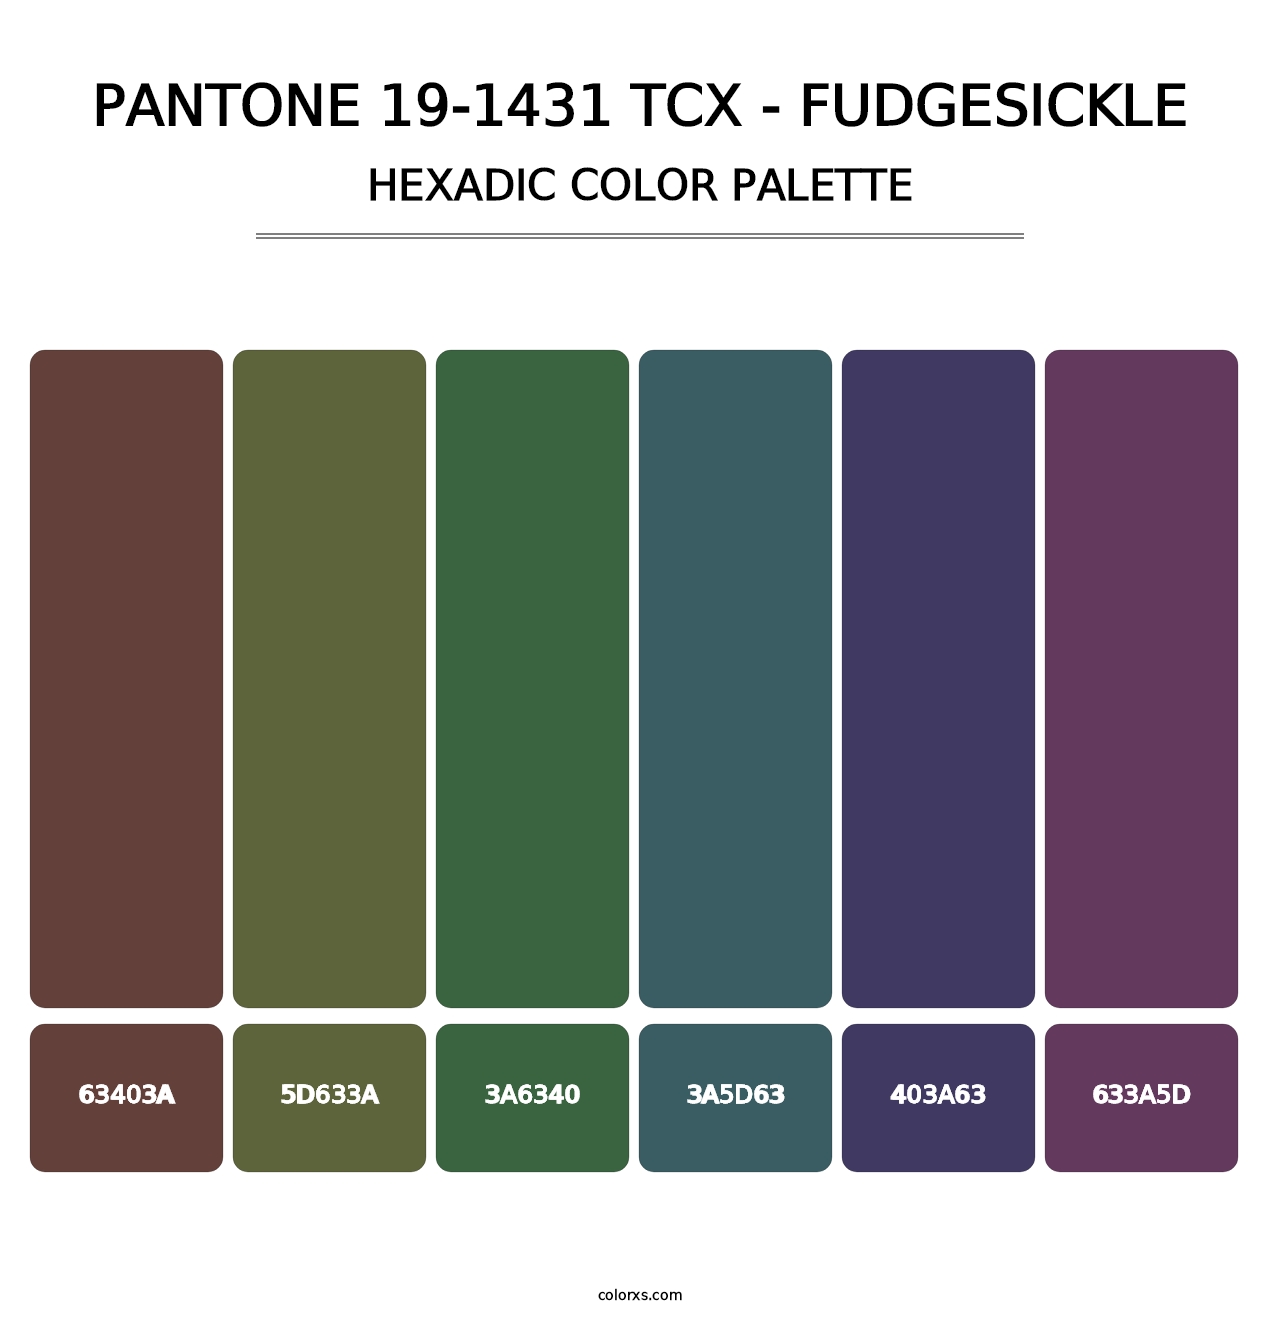 PANTONE 19-1431 TCX - Fudgesickle - Hexadic Color Palette